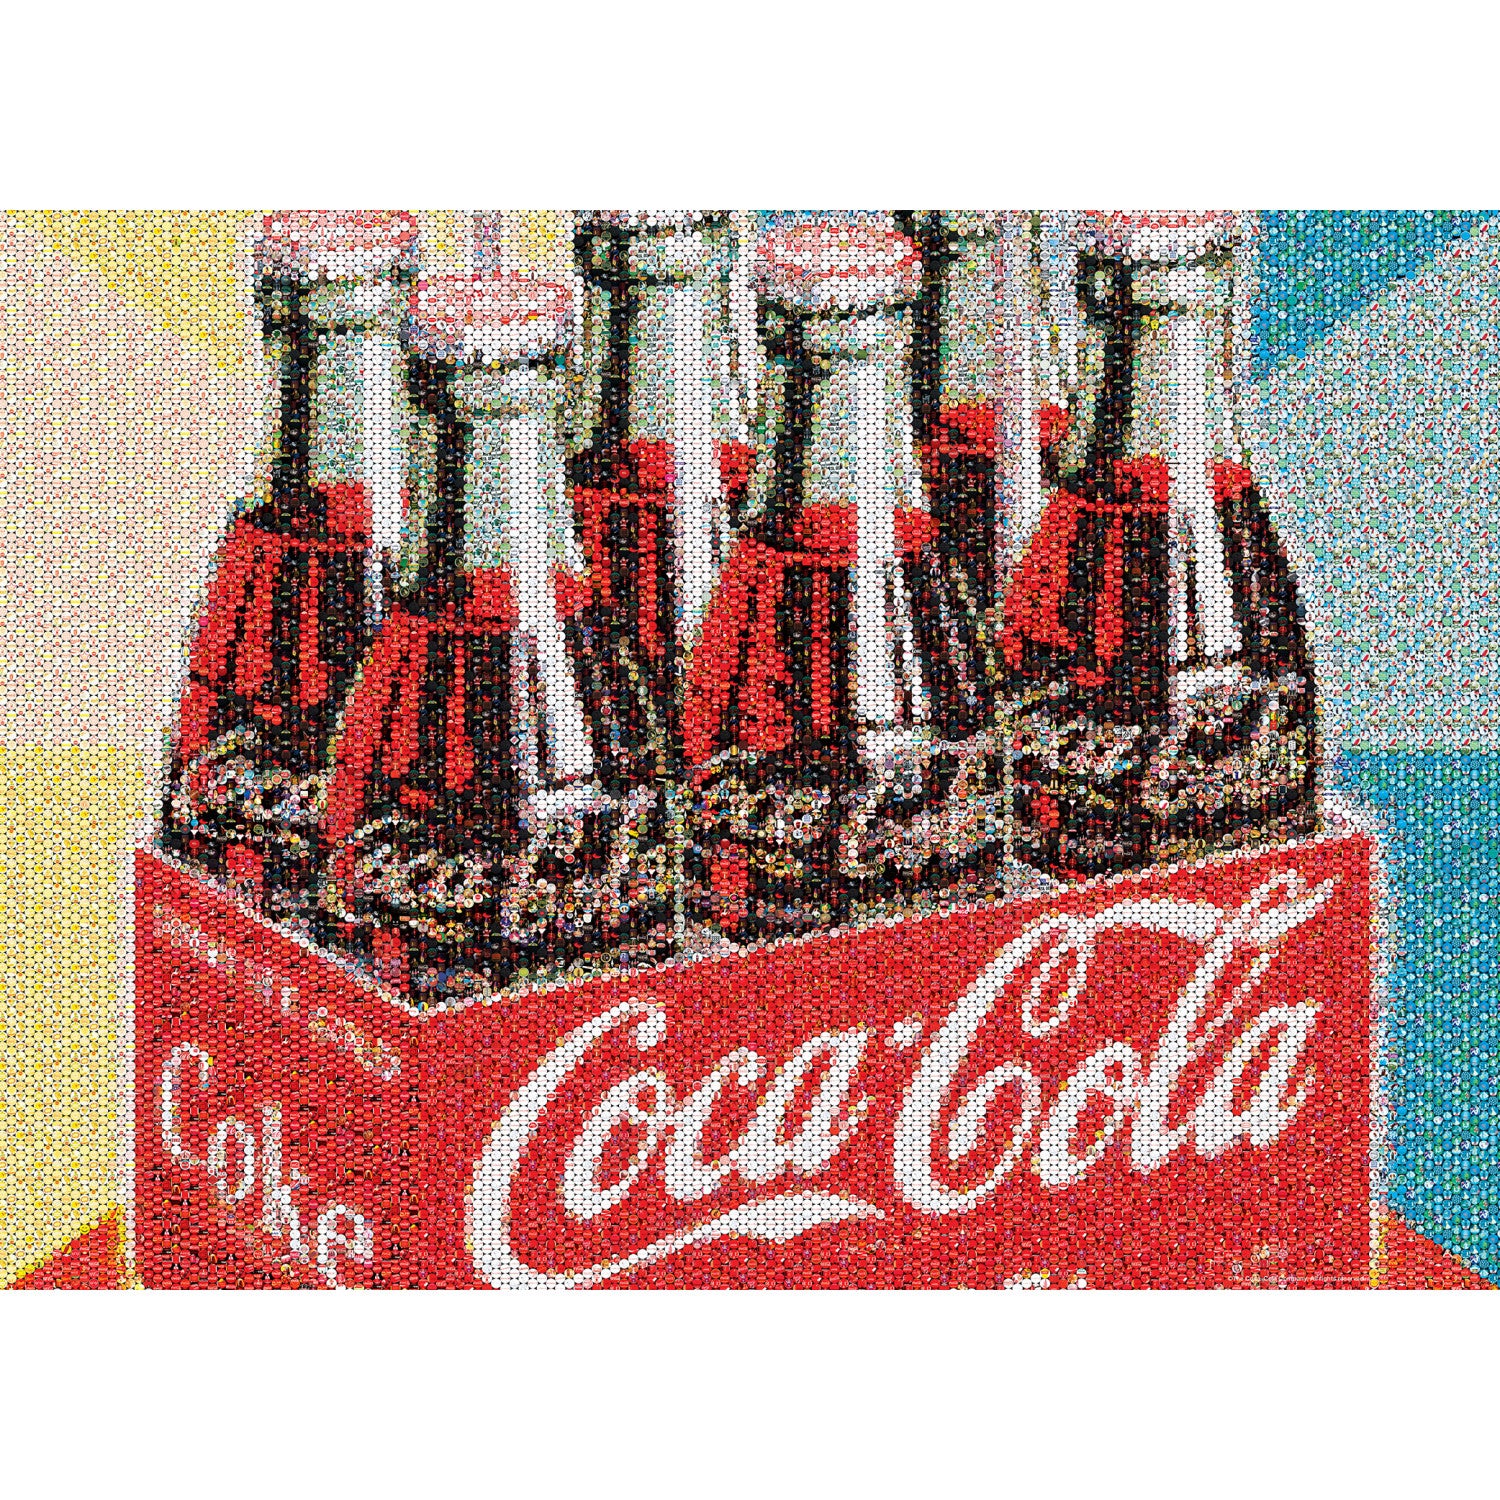 Coca-Cola - Photomosaic Bottles 1000 Piece Puzzle